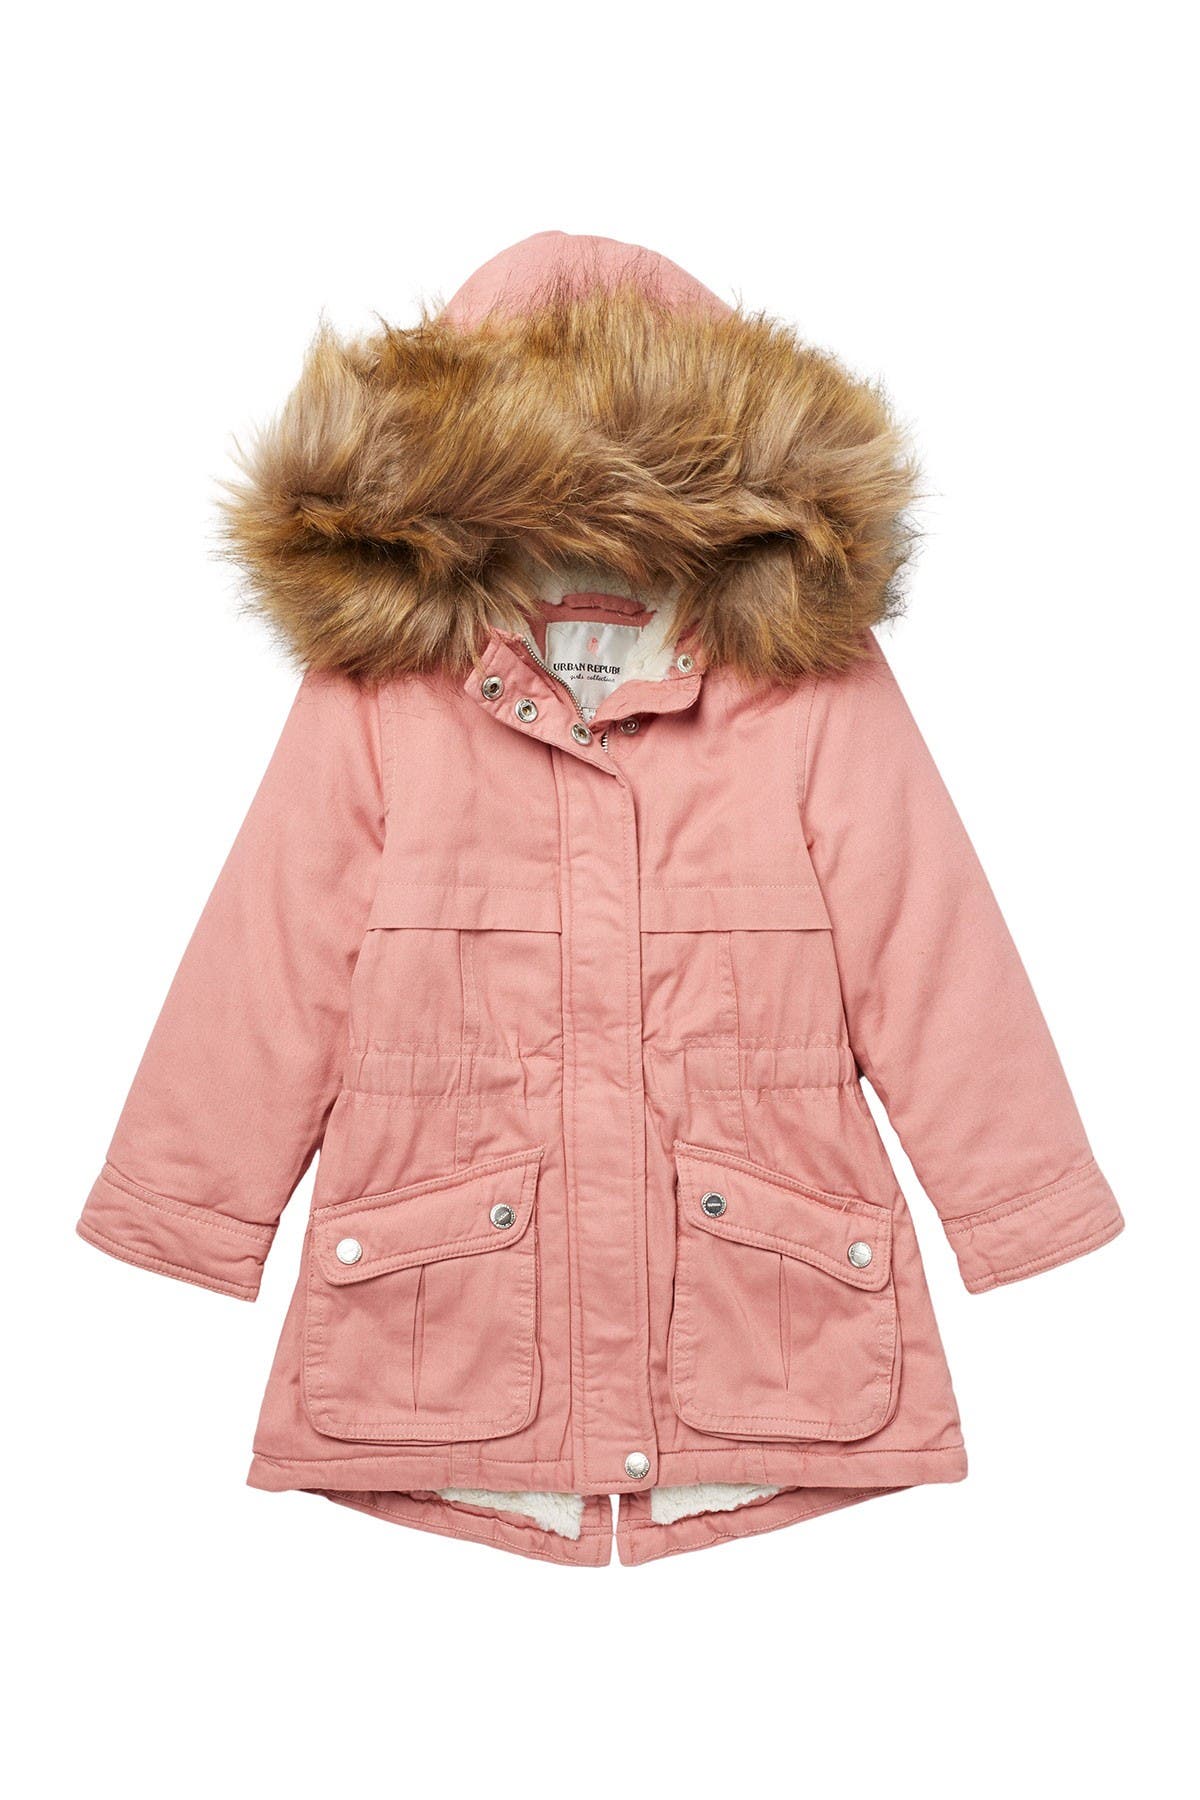 Toddler Girls (Sizes 2T-4T) Coats 